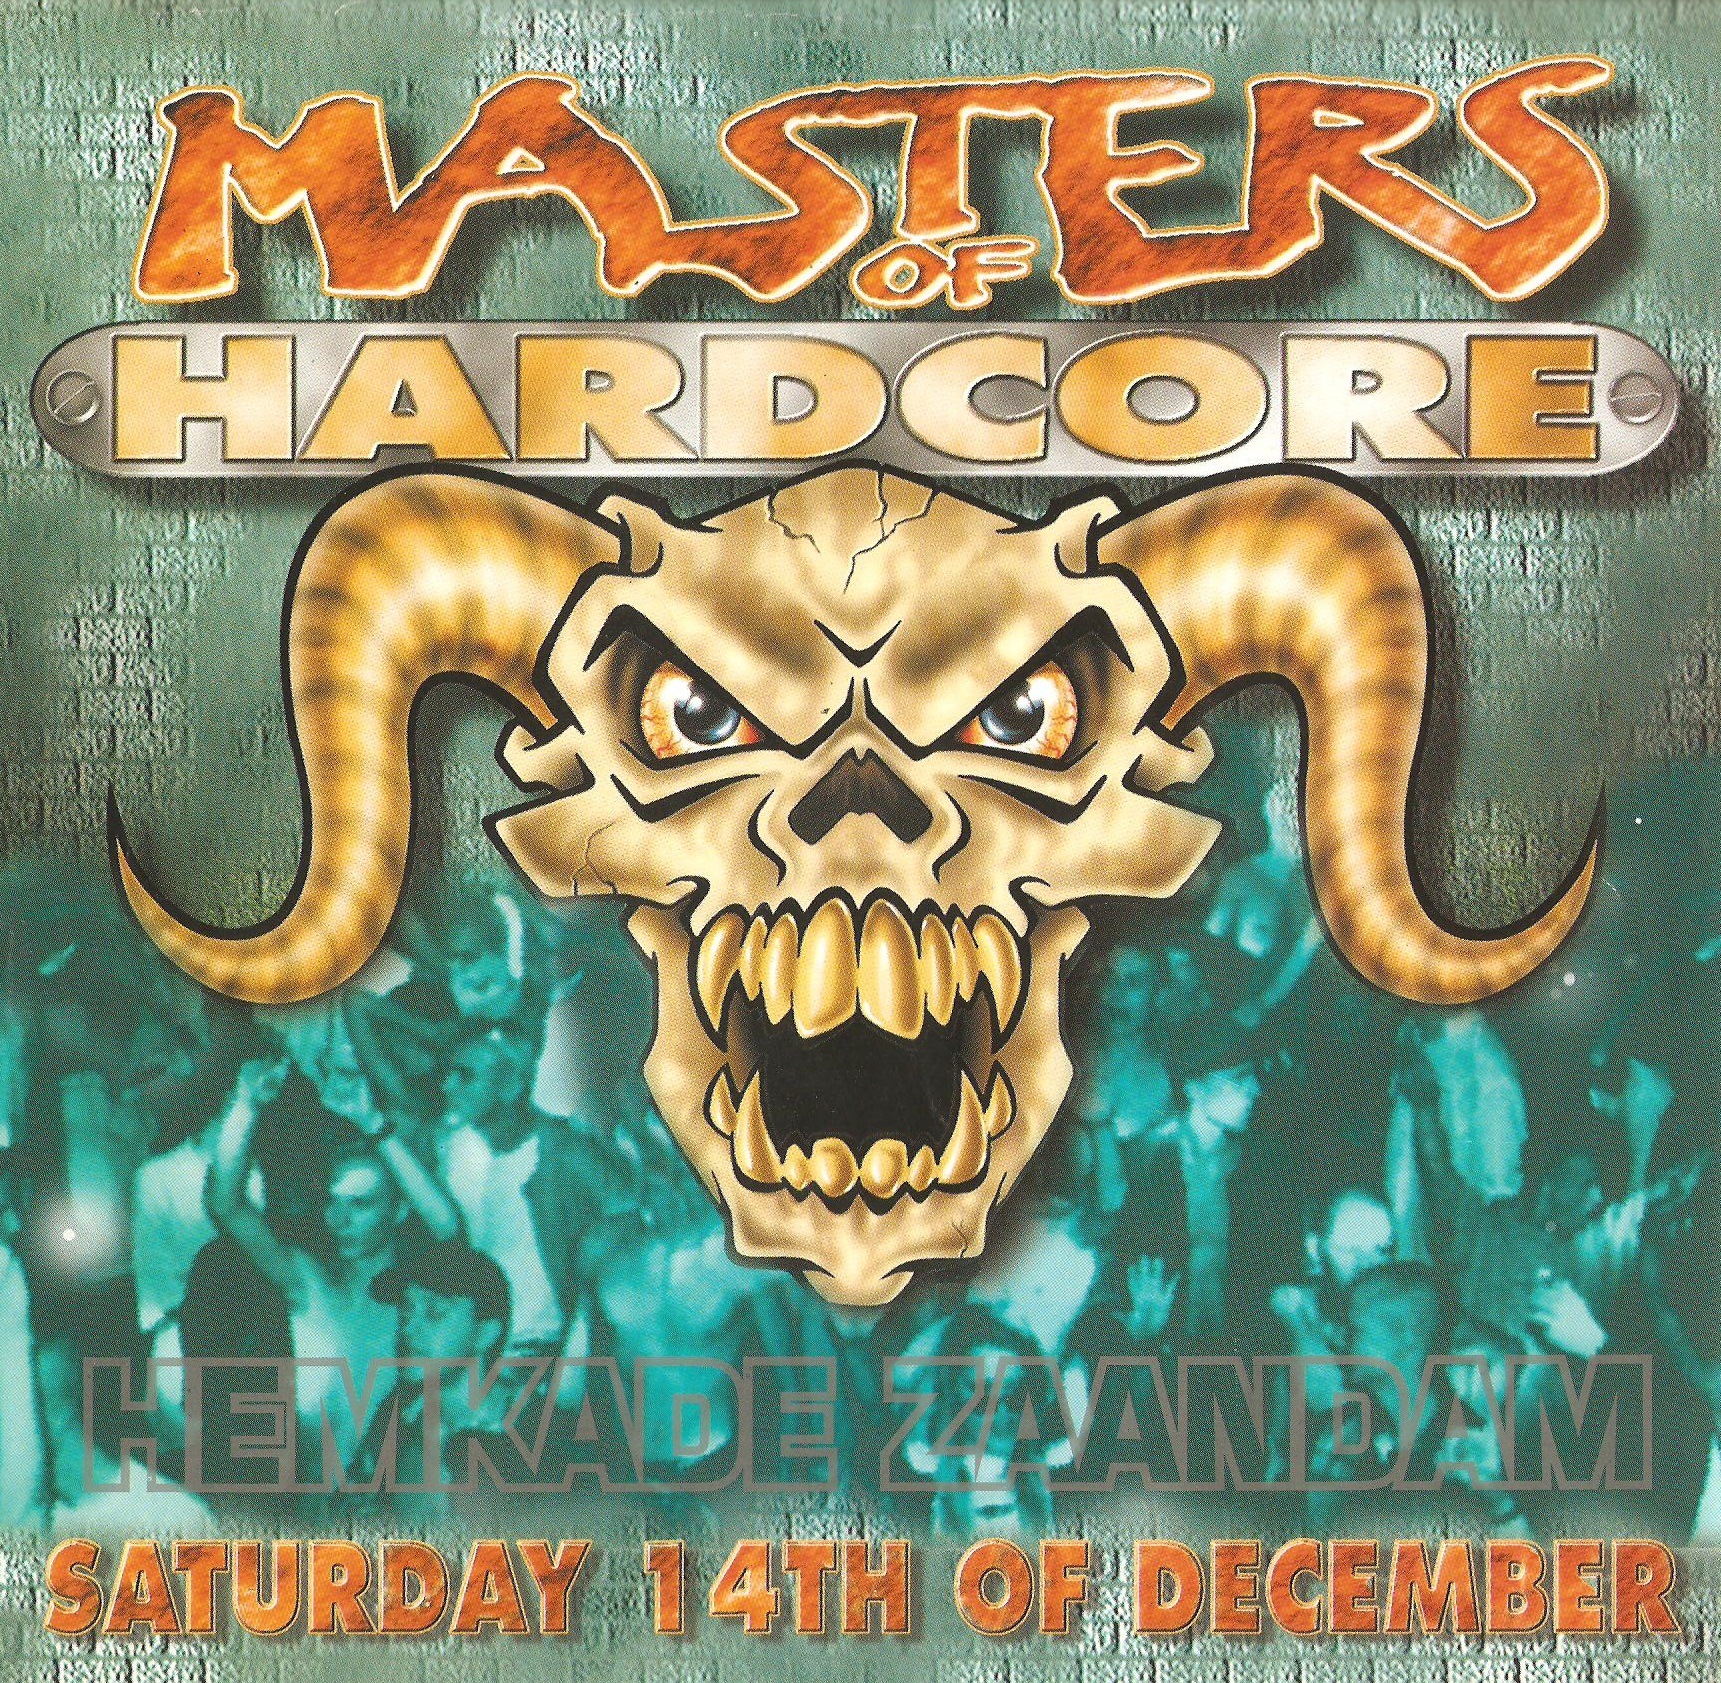 Hardcore музыка. Master of hardcore лейбл Космик. Хардкор музыка. Thunderdome 1996. Master of hardcore музыка картинки.